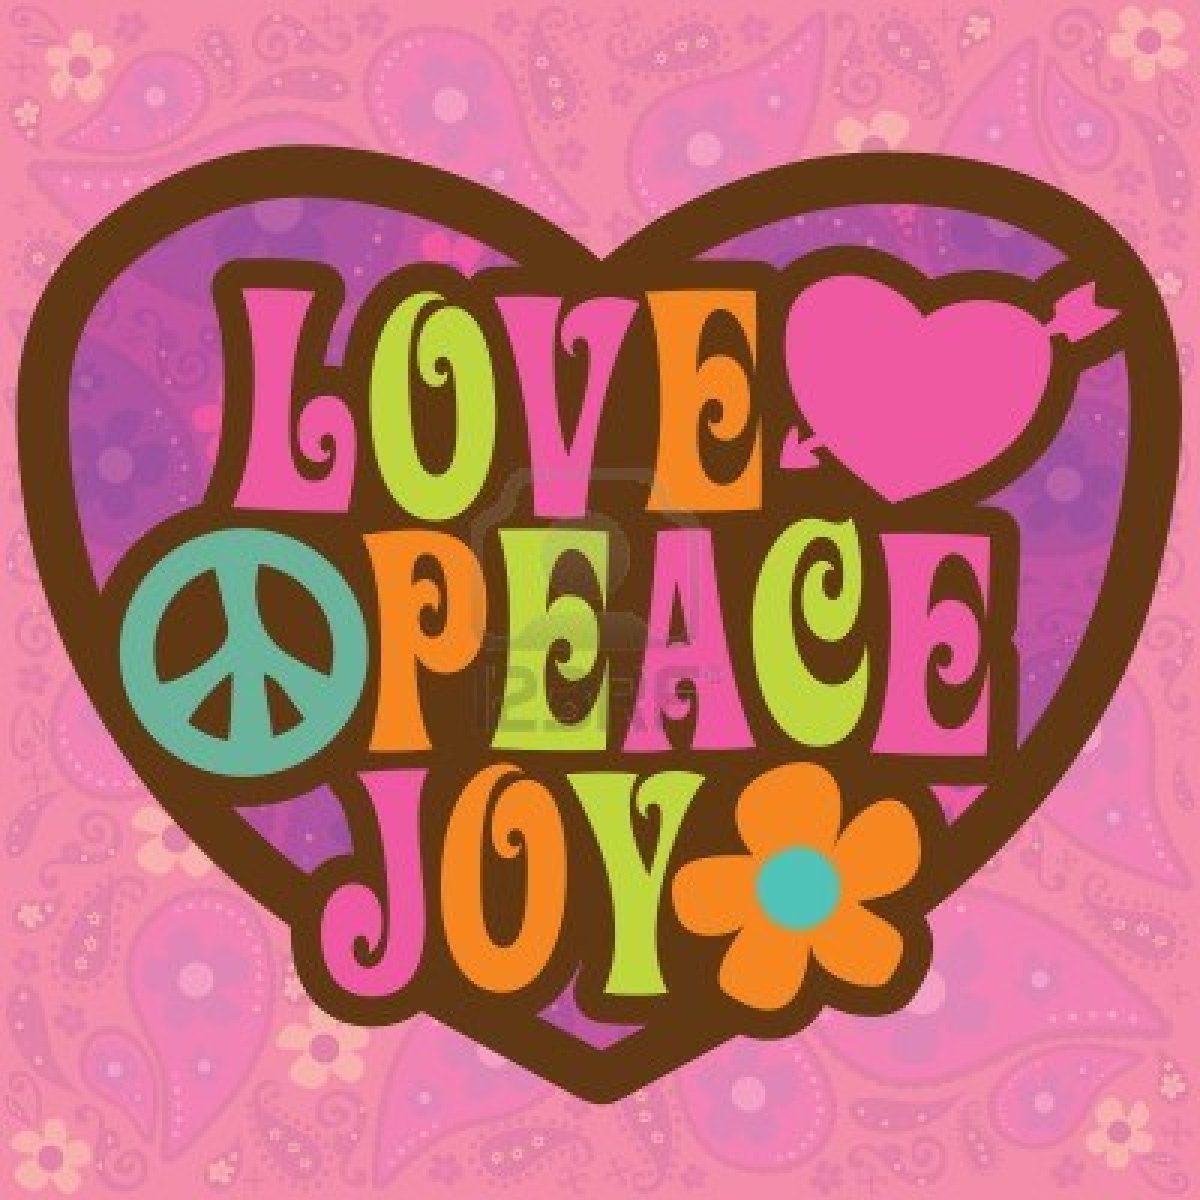 Love Peace And Joy   Peace Photo  36521015    Fanpop